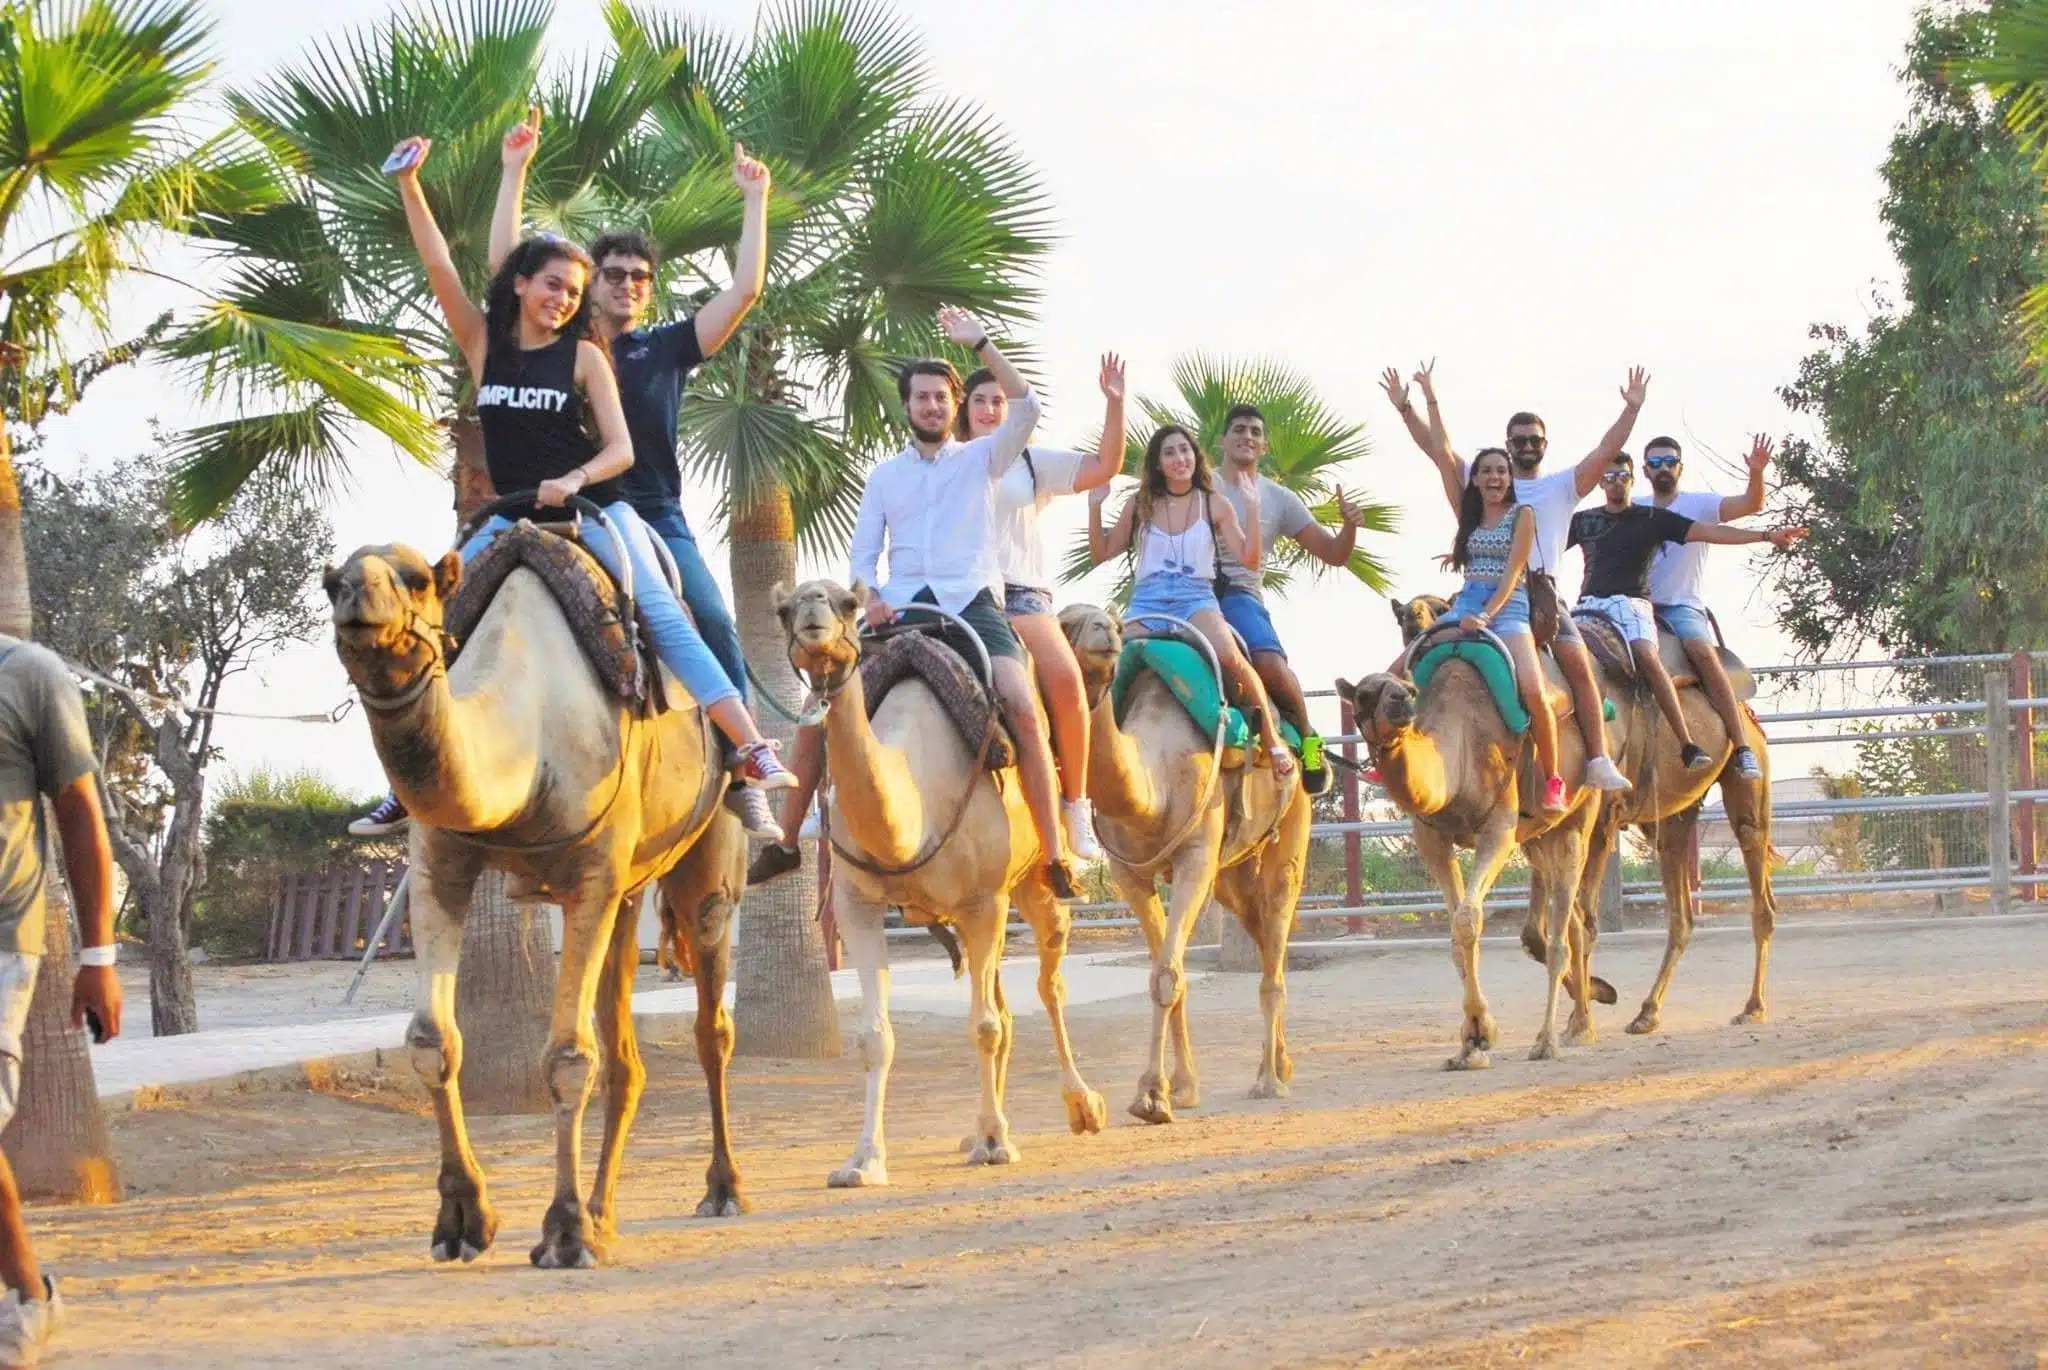 camel-park-camel-walk-la-camella-tenerife-cheap-lowcost-goats-donkeys-nature-parrots-horses-chickens-7